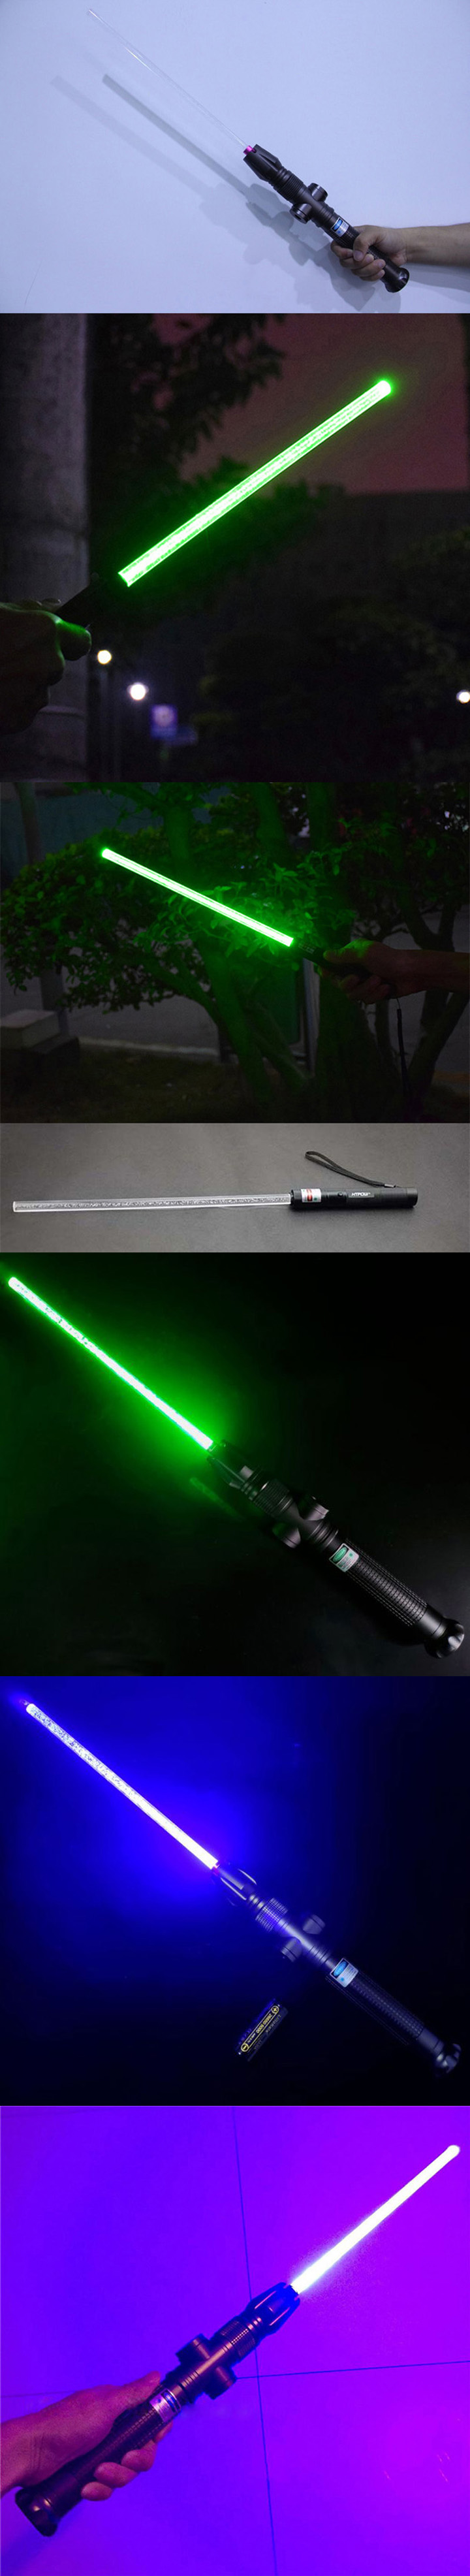 épée laser